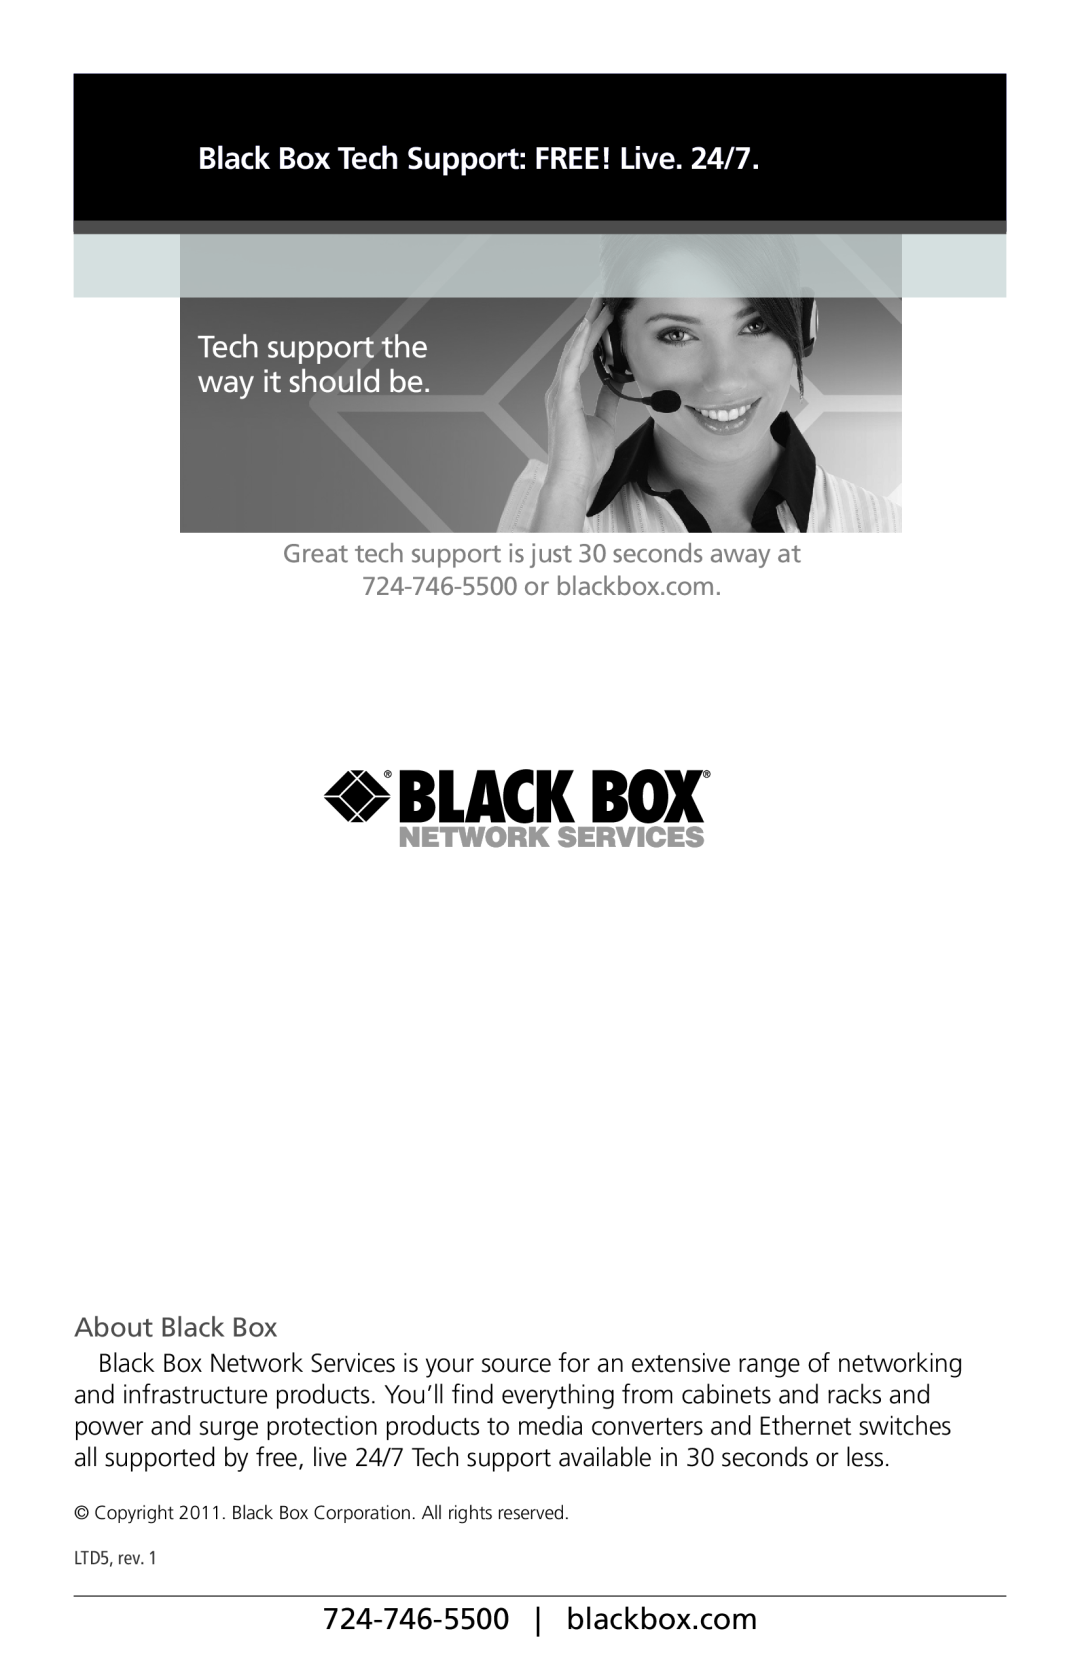 Black Box LTD5B Tech support the way it should be, Black Box Tech Support FREE! Live. 24/7, blackbox.com, About Black Box 